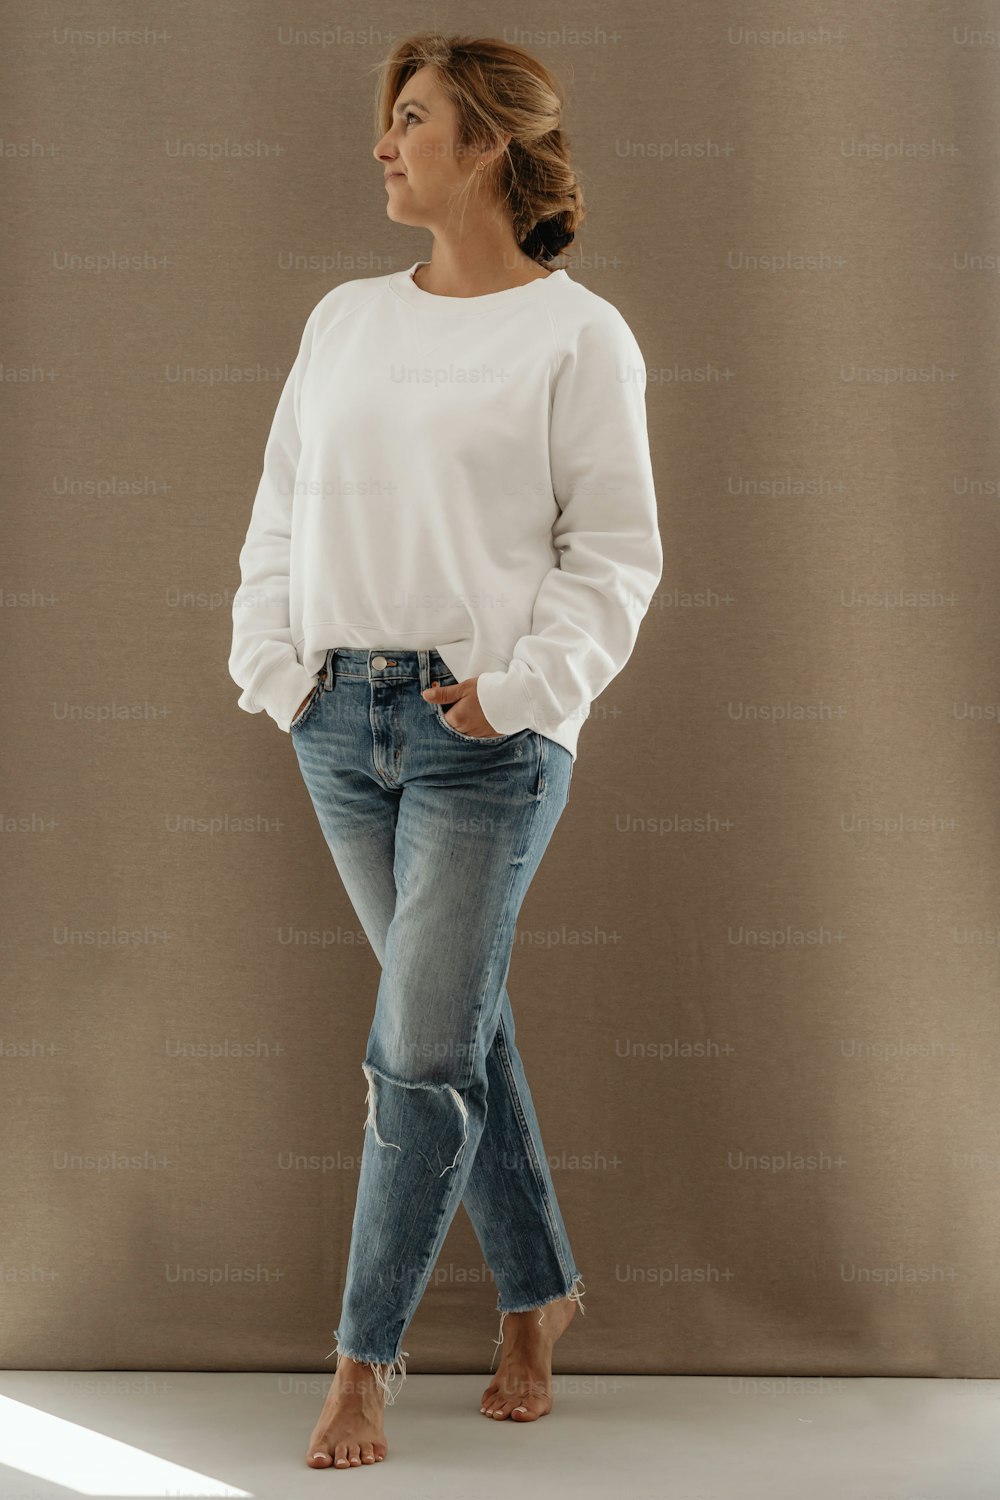 Una donna in camicia bianca e jeans